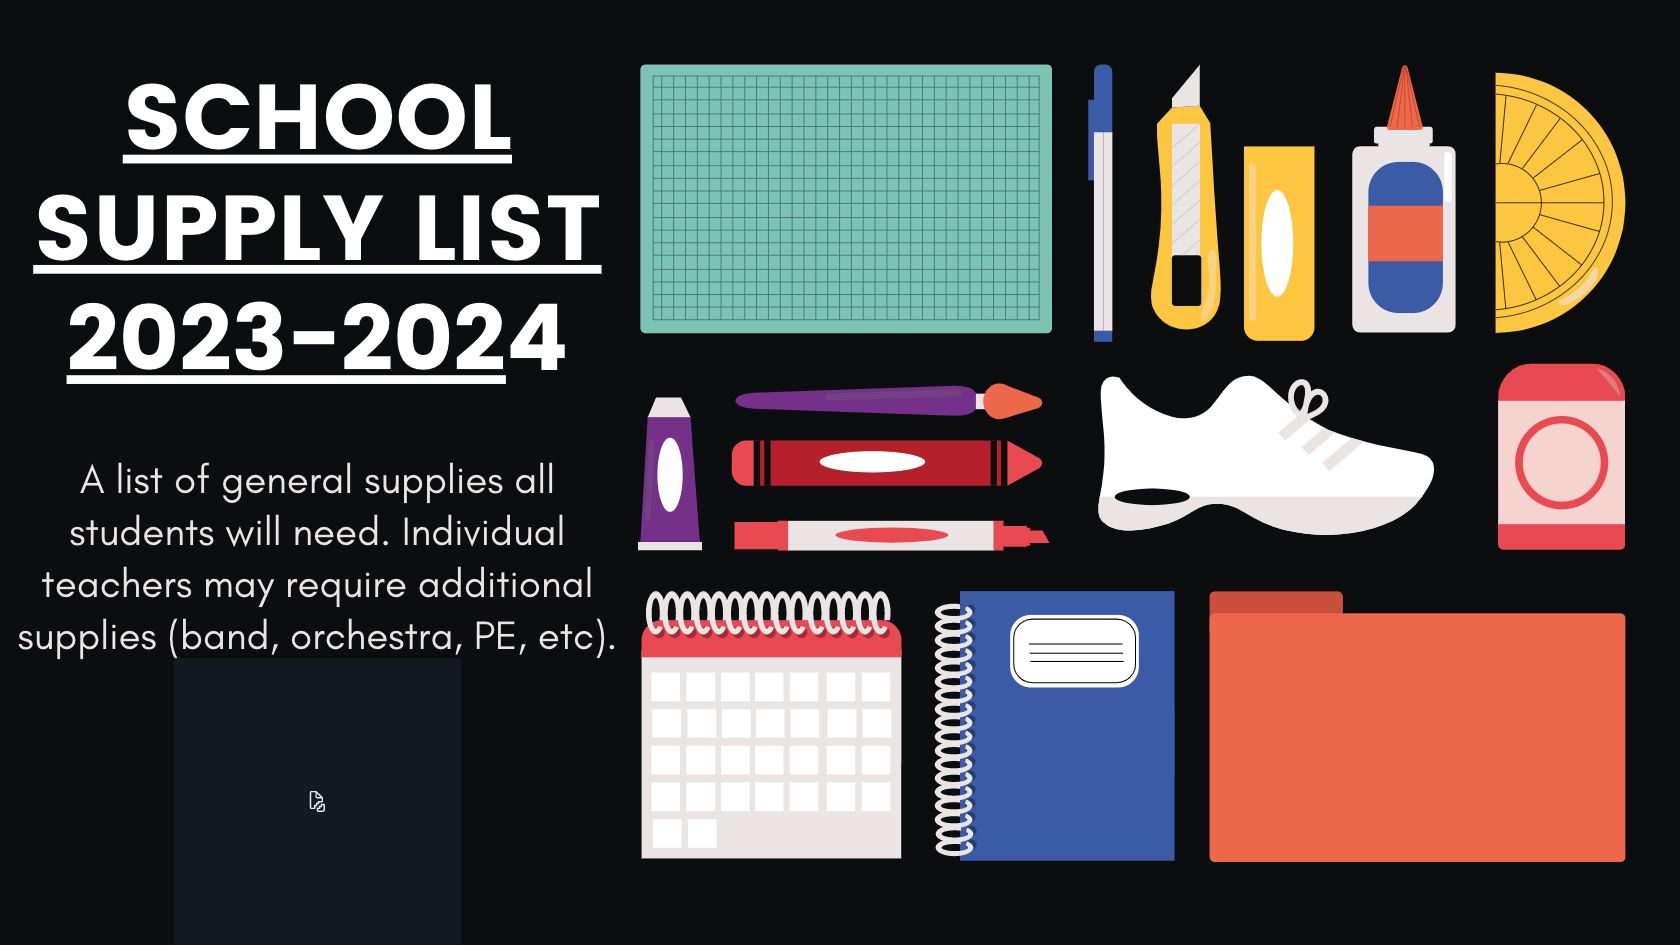 Supplementary catalogue of general school supplies, school